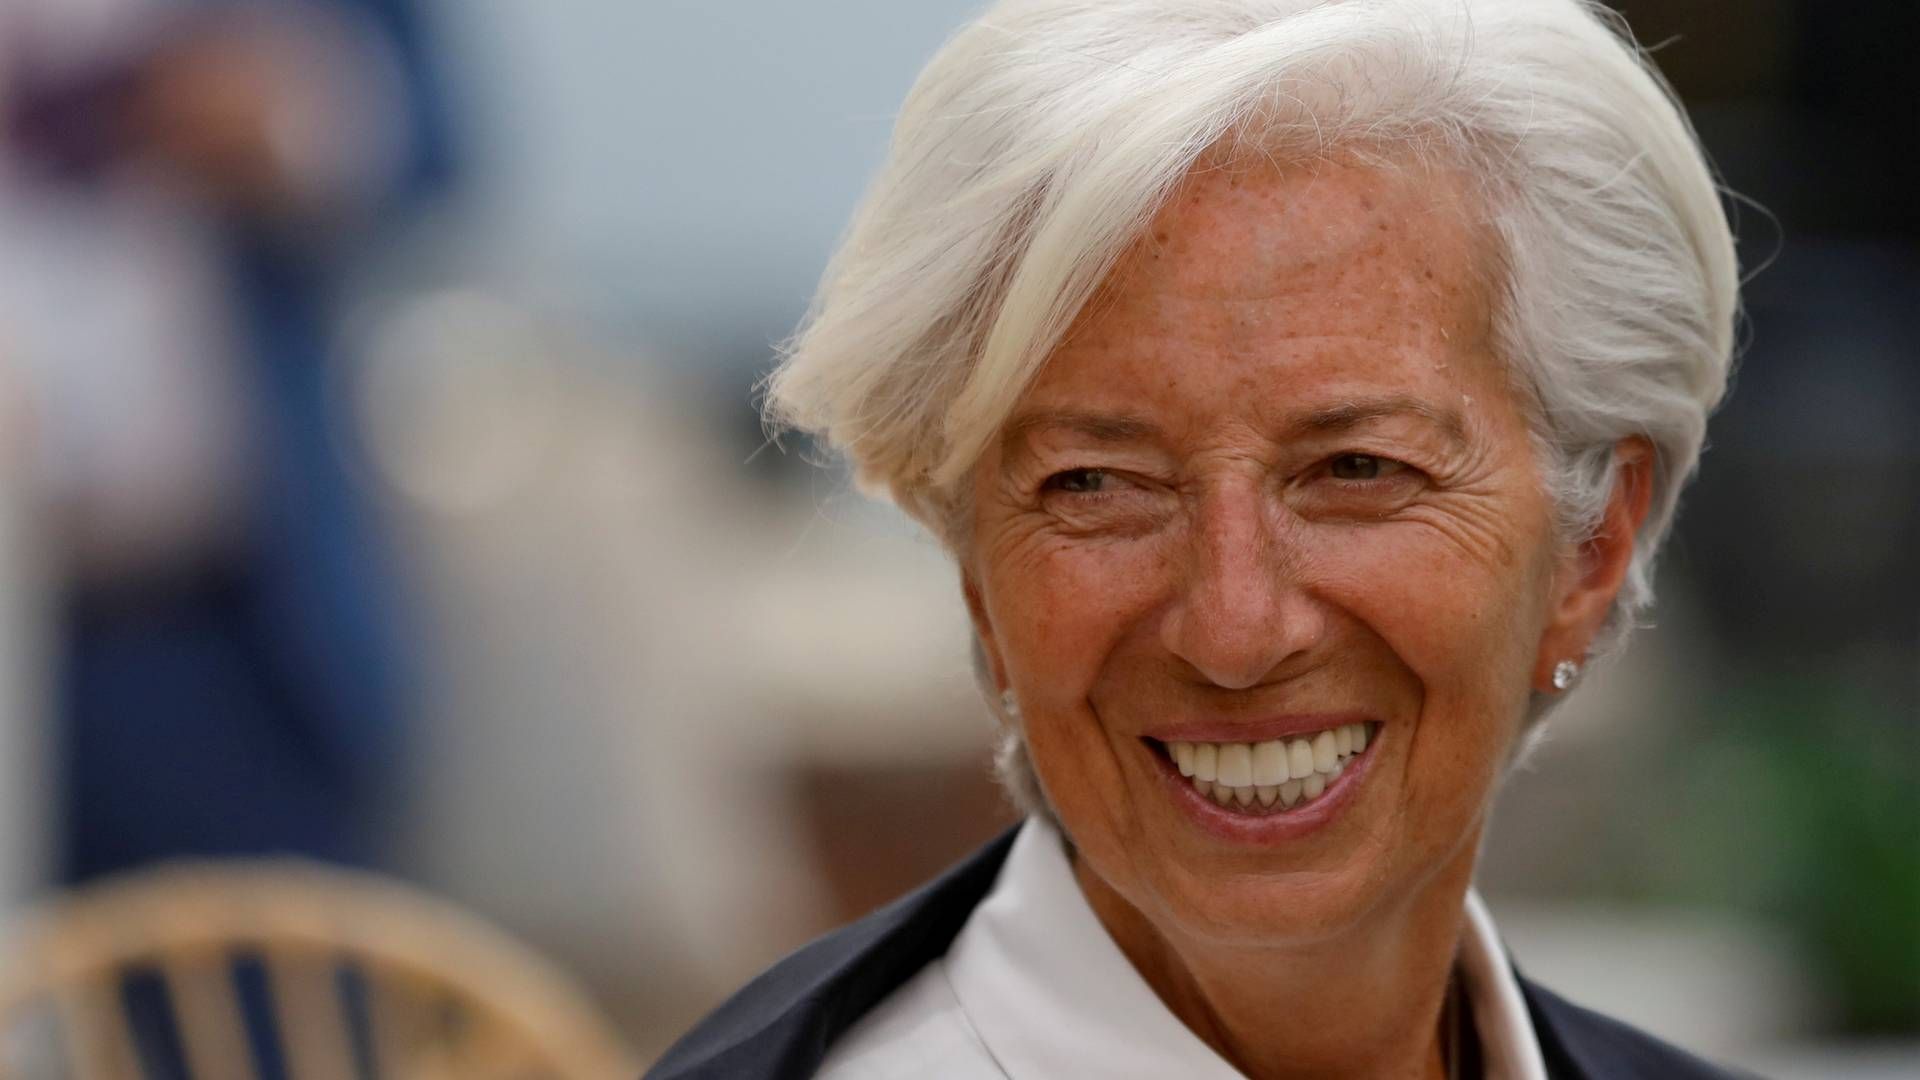 Chefen for Den Internationale Valutafond (IMF), franskmanden Christine Lagarde. | Foto: Carlos Jasso / Reuters / Ritzau Scanpix